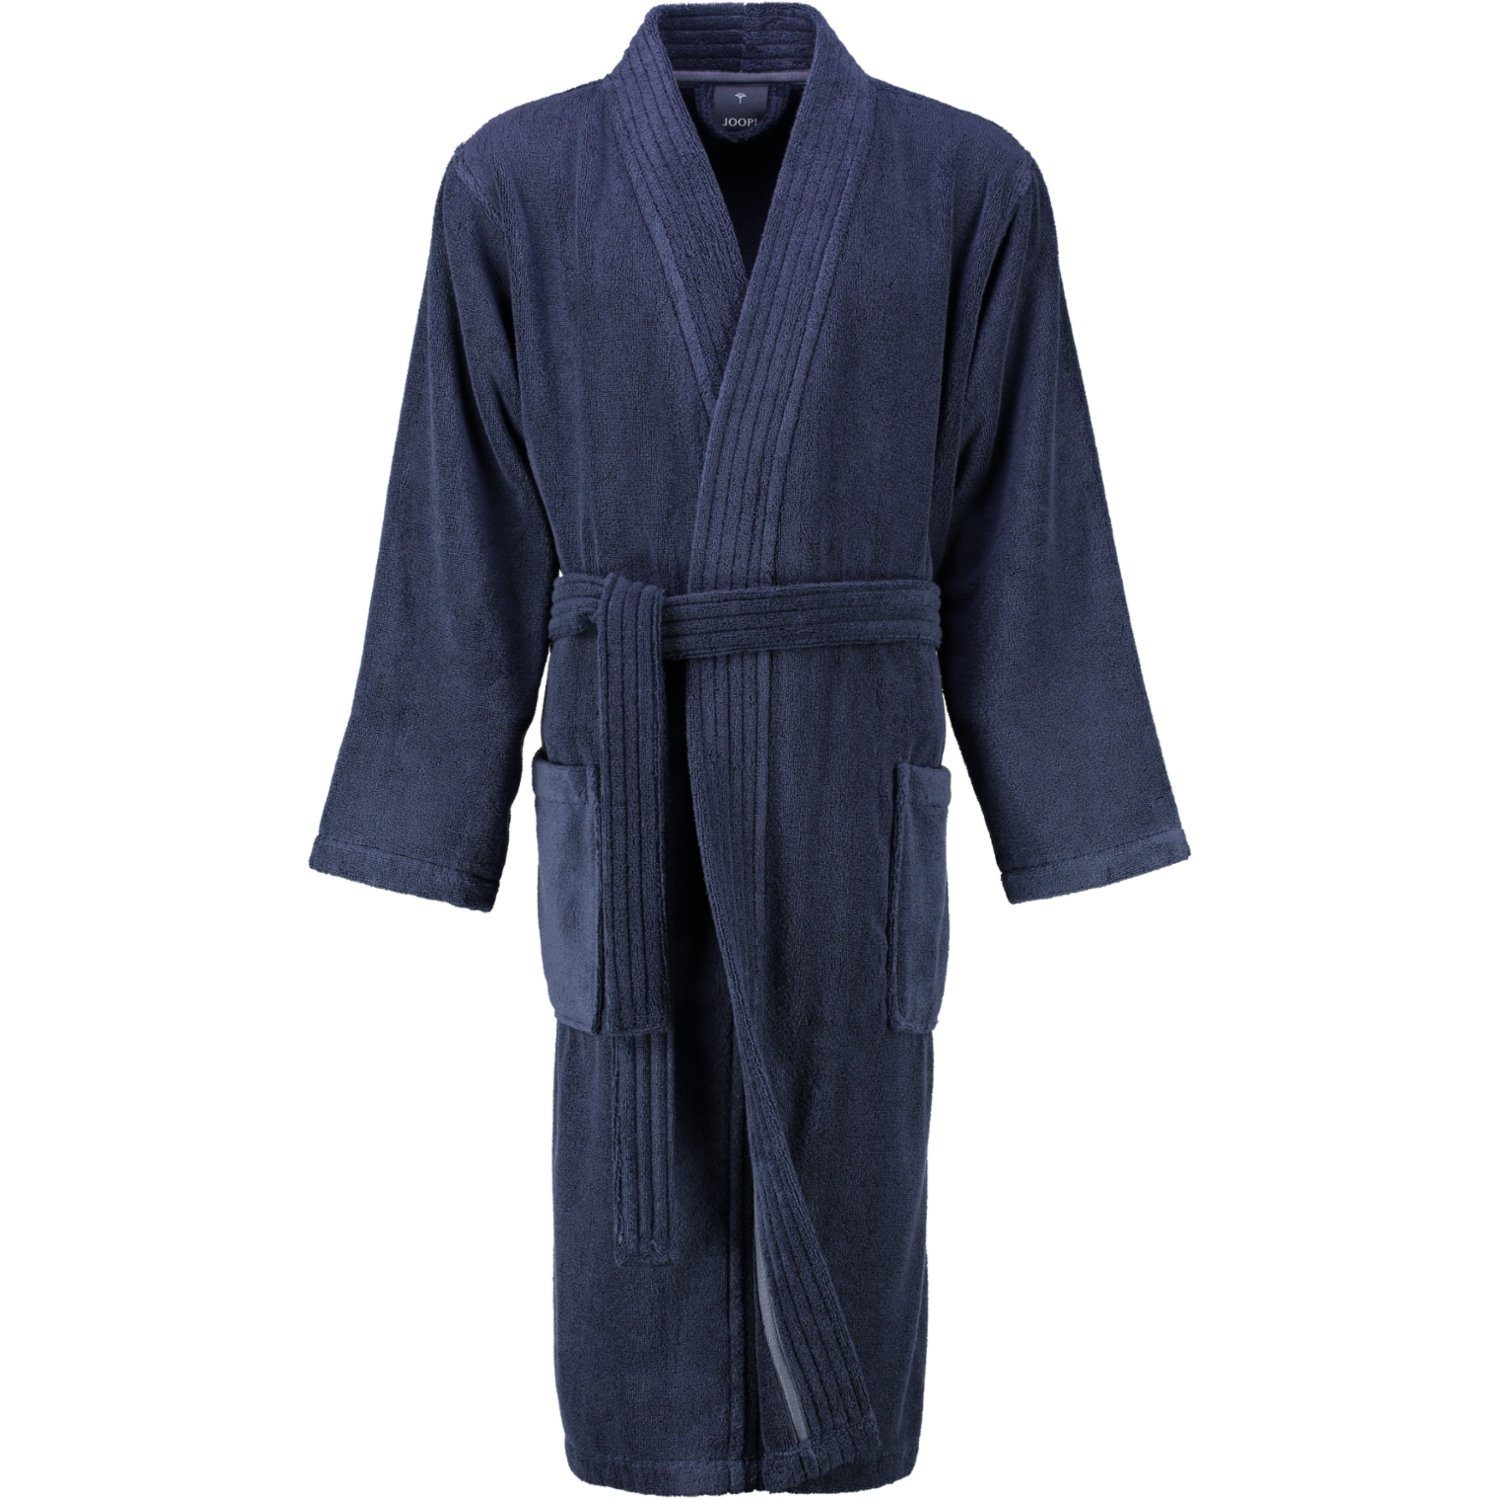 Kimono, Baumwolle dunkelblau 1647 Frottier, Joop! Herrenbademantel Kimono 100%